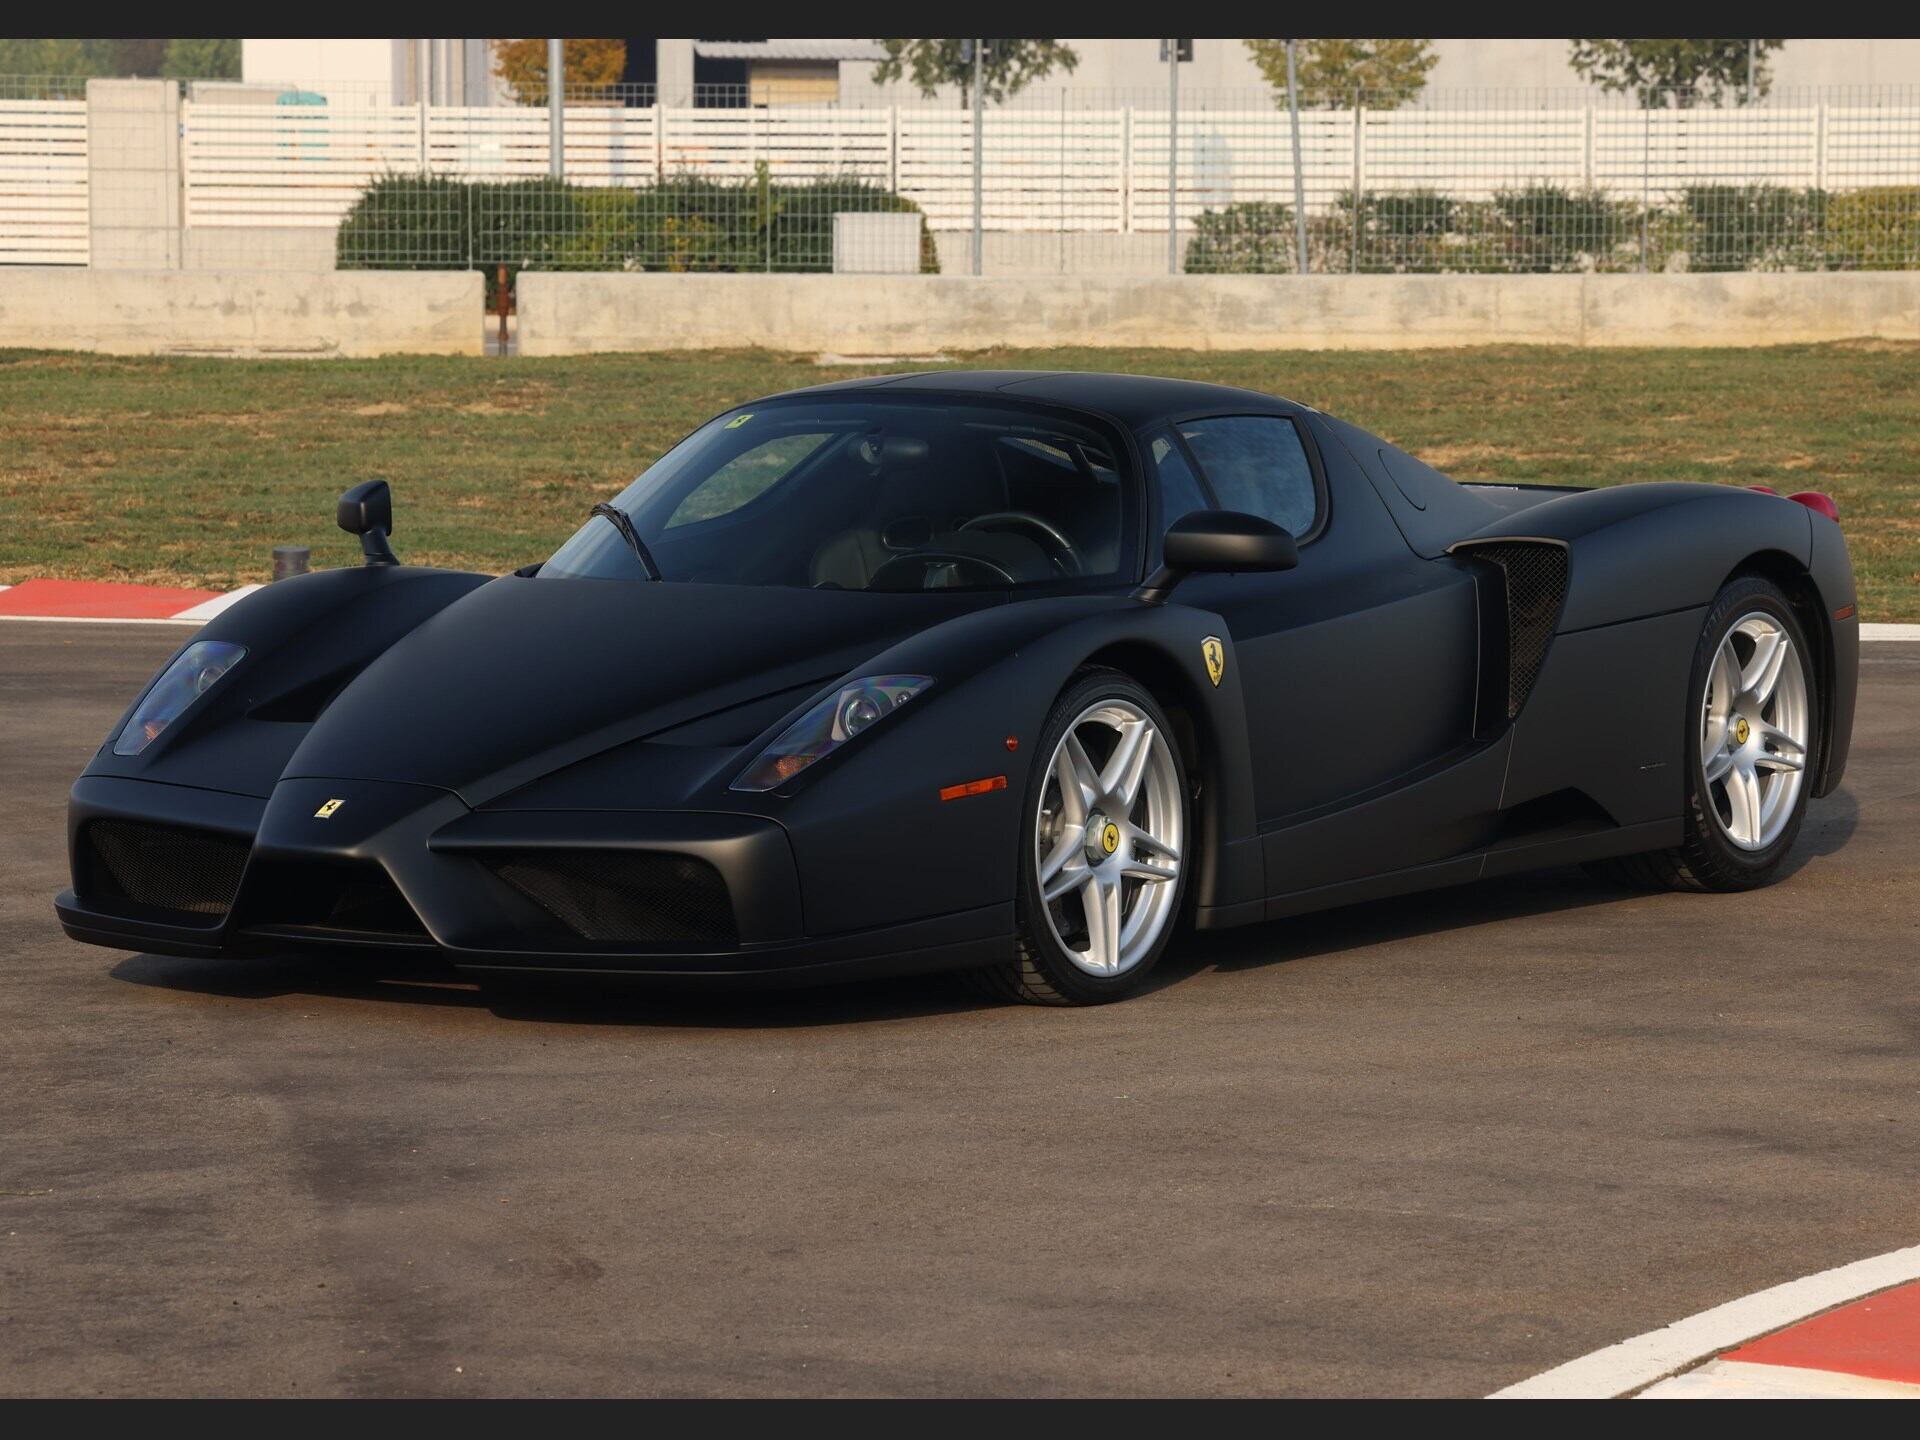 imagen 3 de Sale a subasta un Ferrari Enzo negro mate único excepcional.